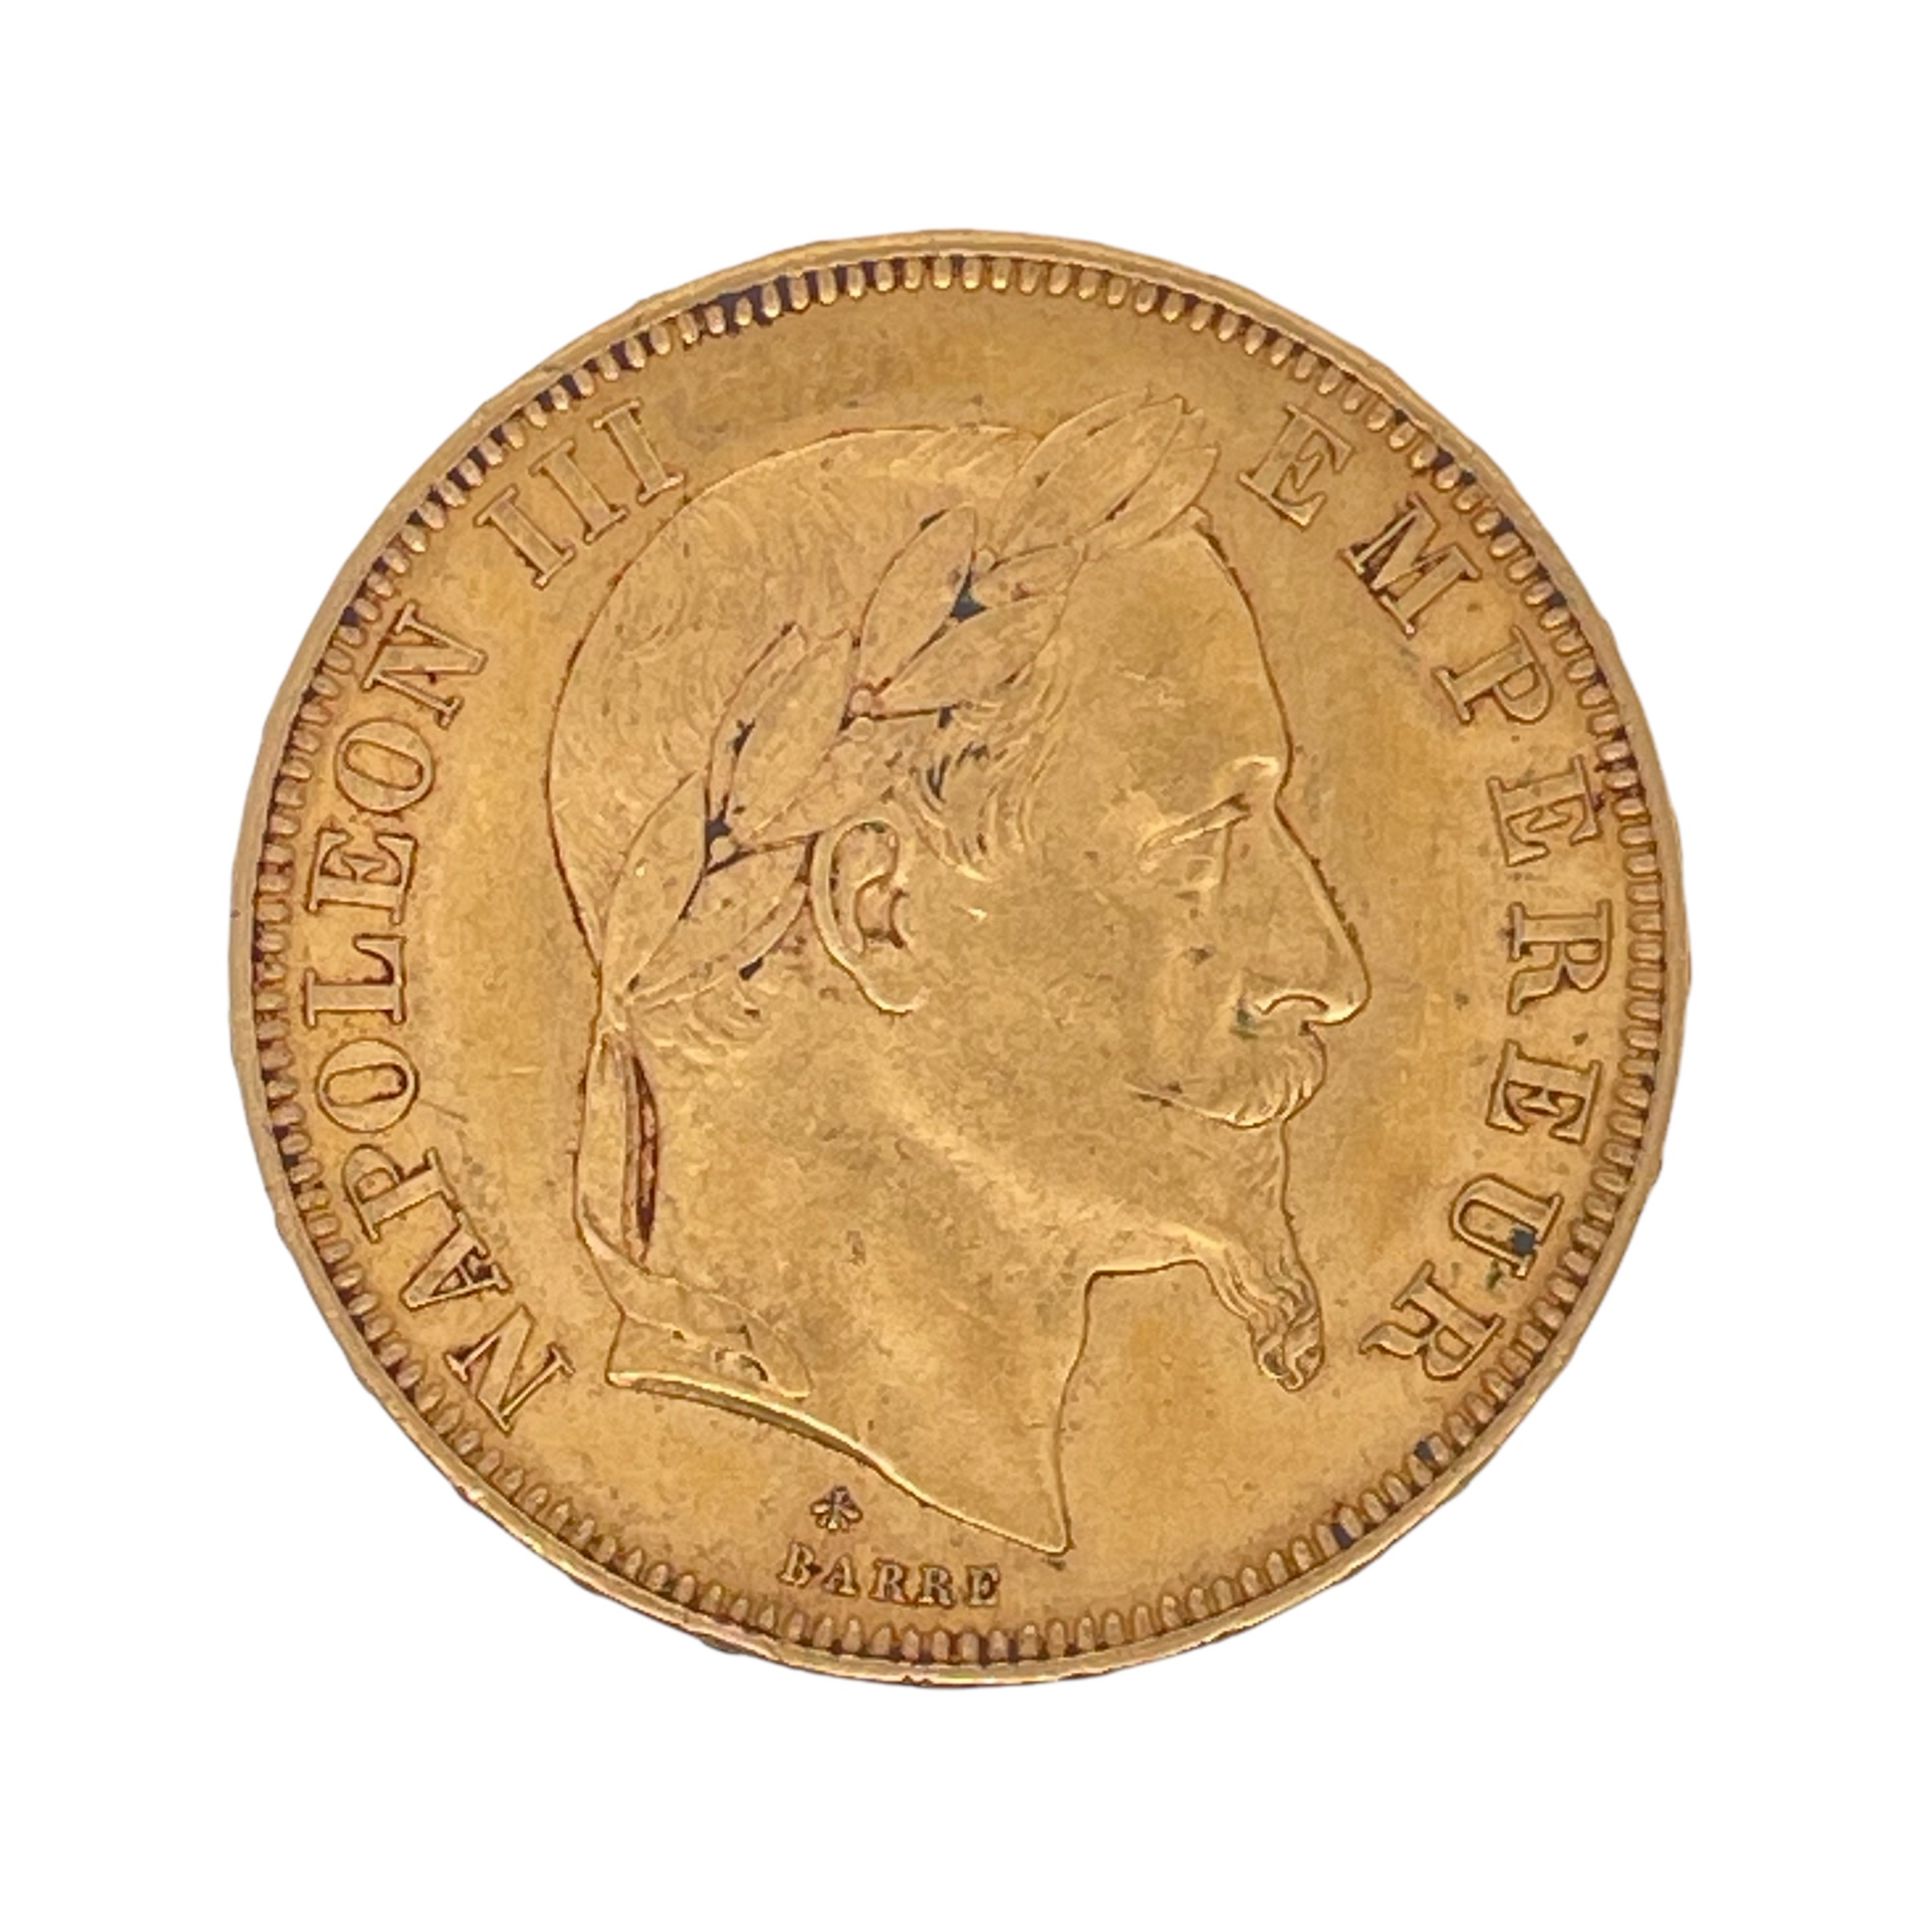 Goldmünze Napoleon III Empereur 50 Francs 16,1g 900/- Gelbgold 1866 - Image 2 of 2